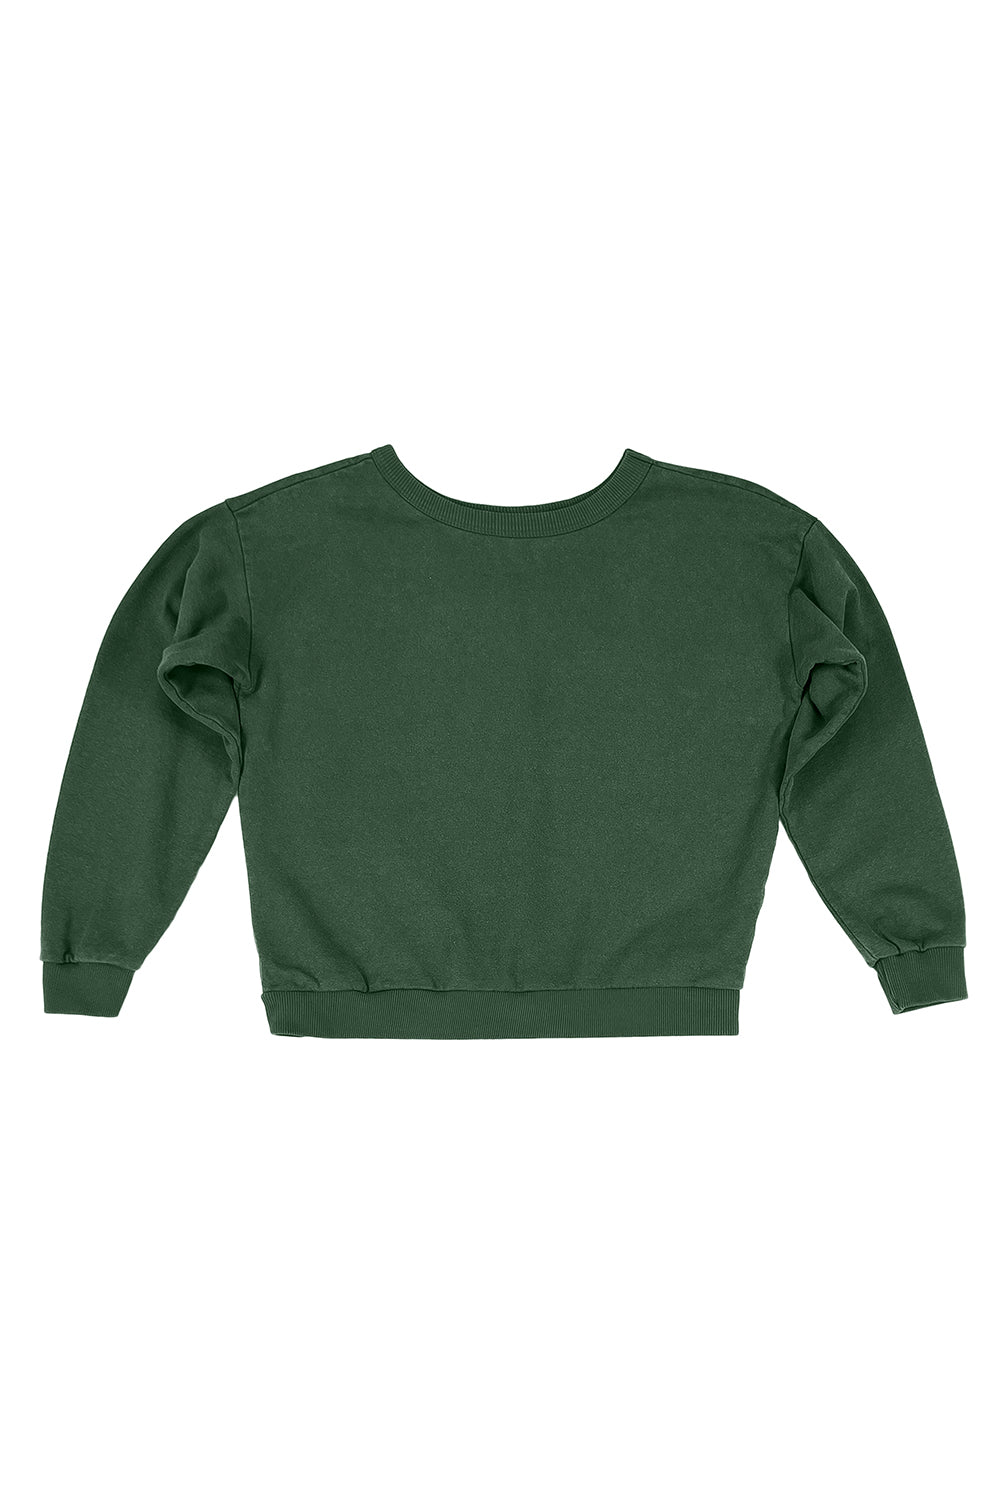 Laguna Cropped Sweatshirt | Jungmaven Hemp Clothing & Accessories / Color: Hunter Green